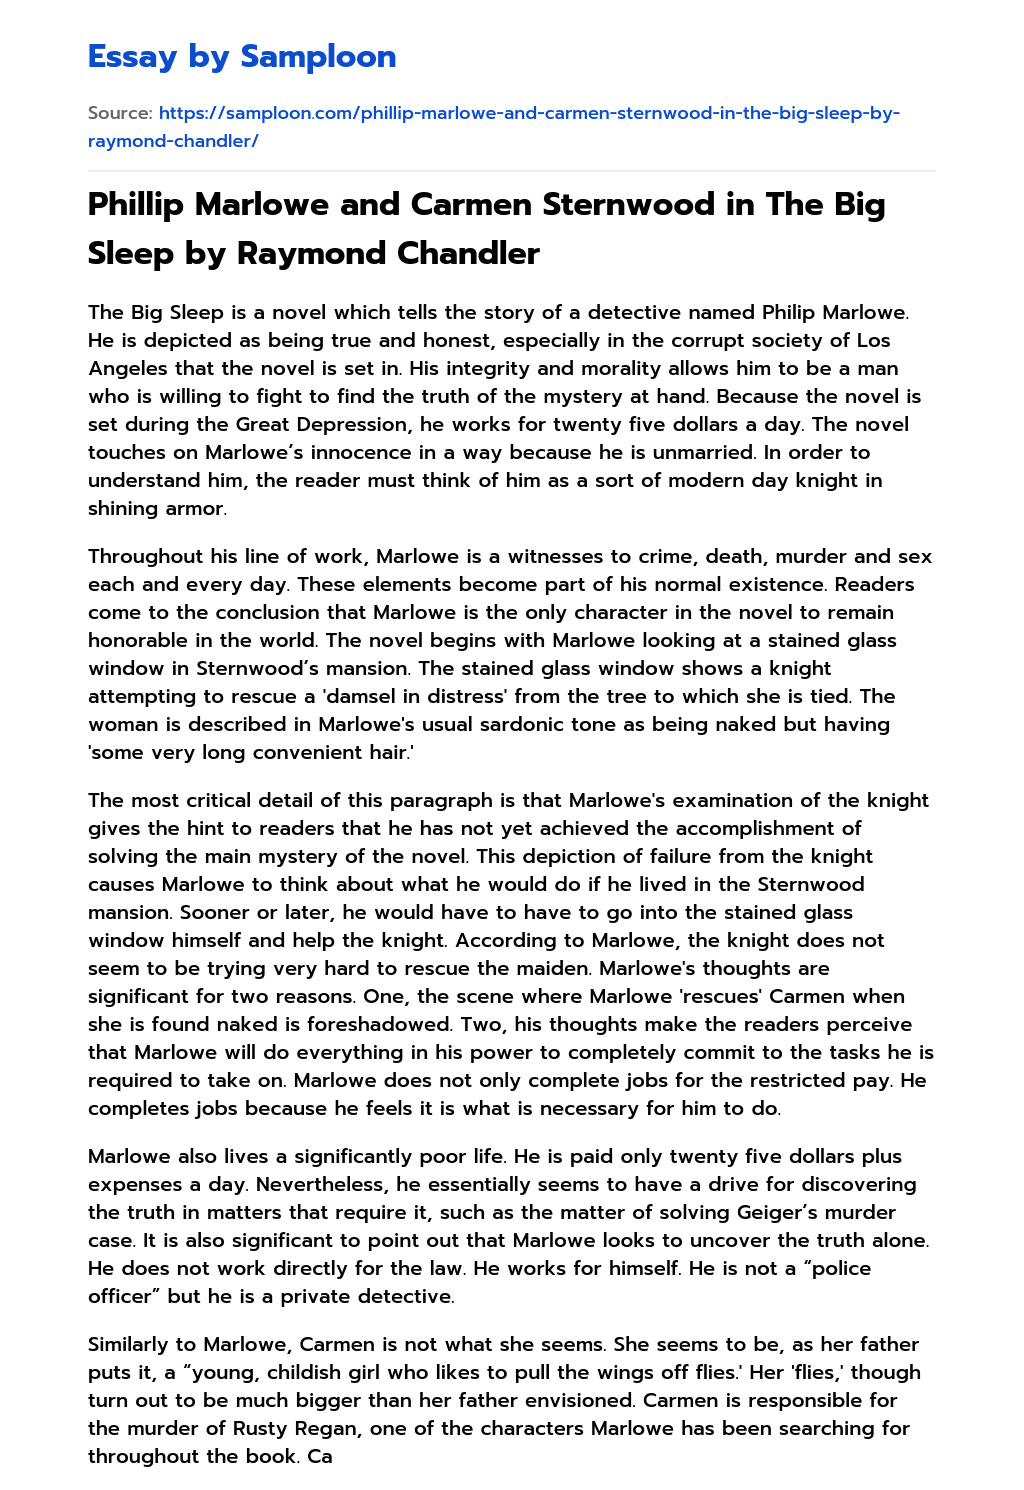 Phillip Marlowe and Carmen Sternwood in The Big Sleep by Raymond Chandler Analytical Essay essay